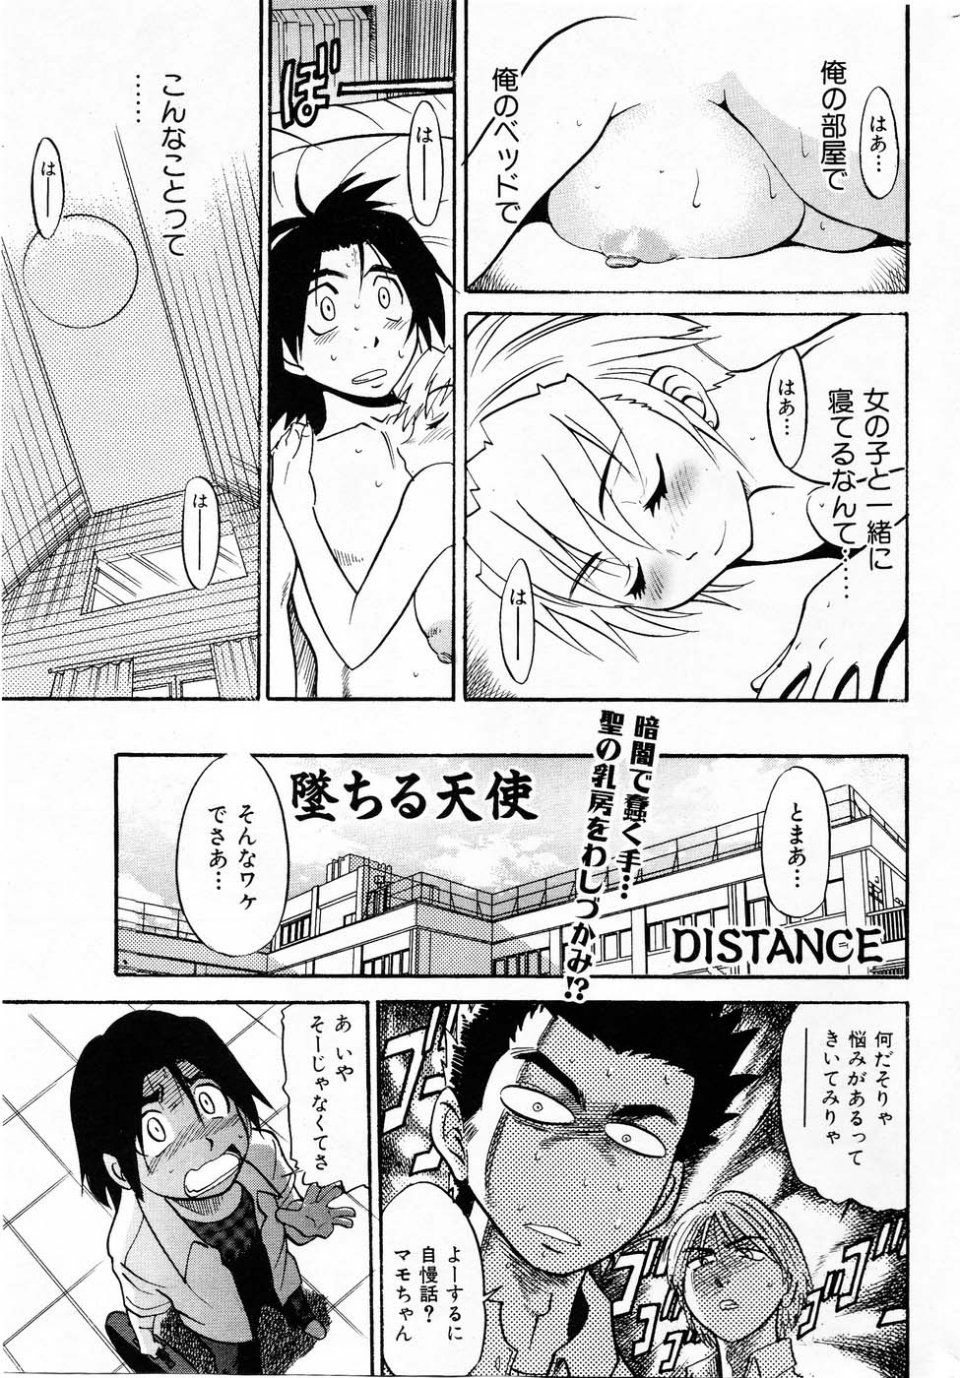 Distance - Ochiru Tenshi Vol. 3 (INCOMPLETE) - Photo #45